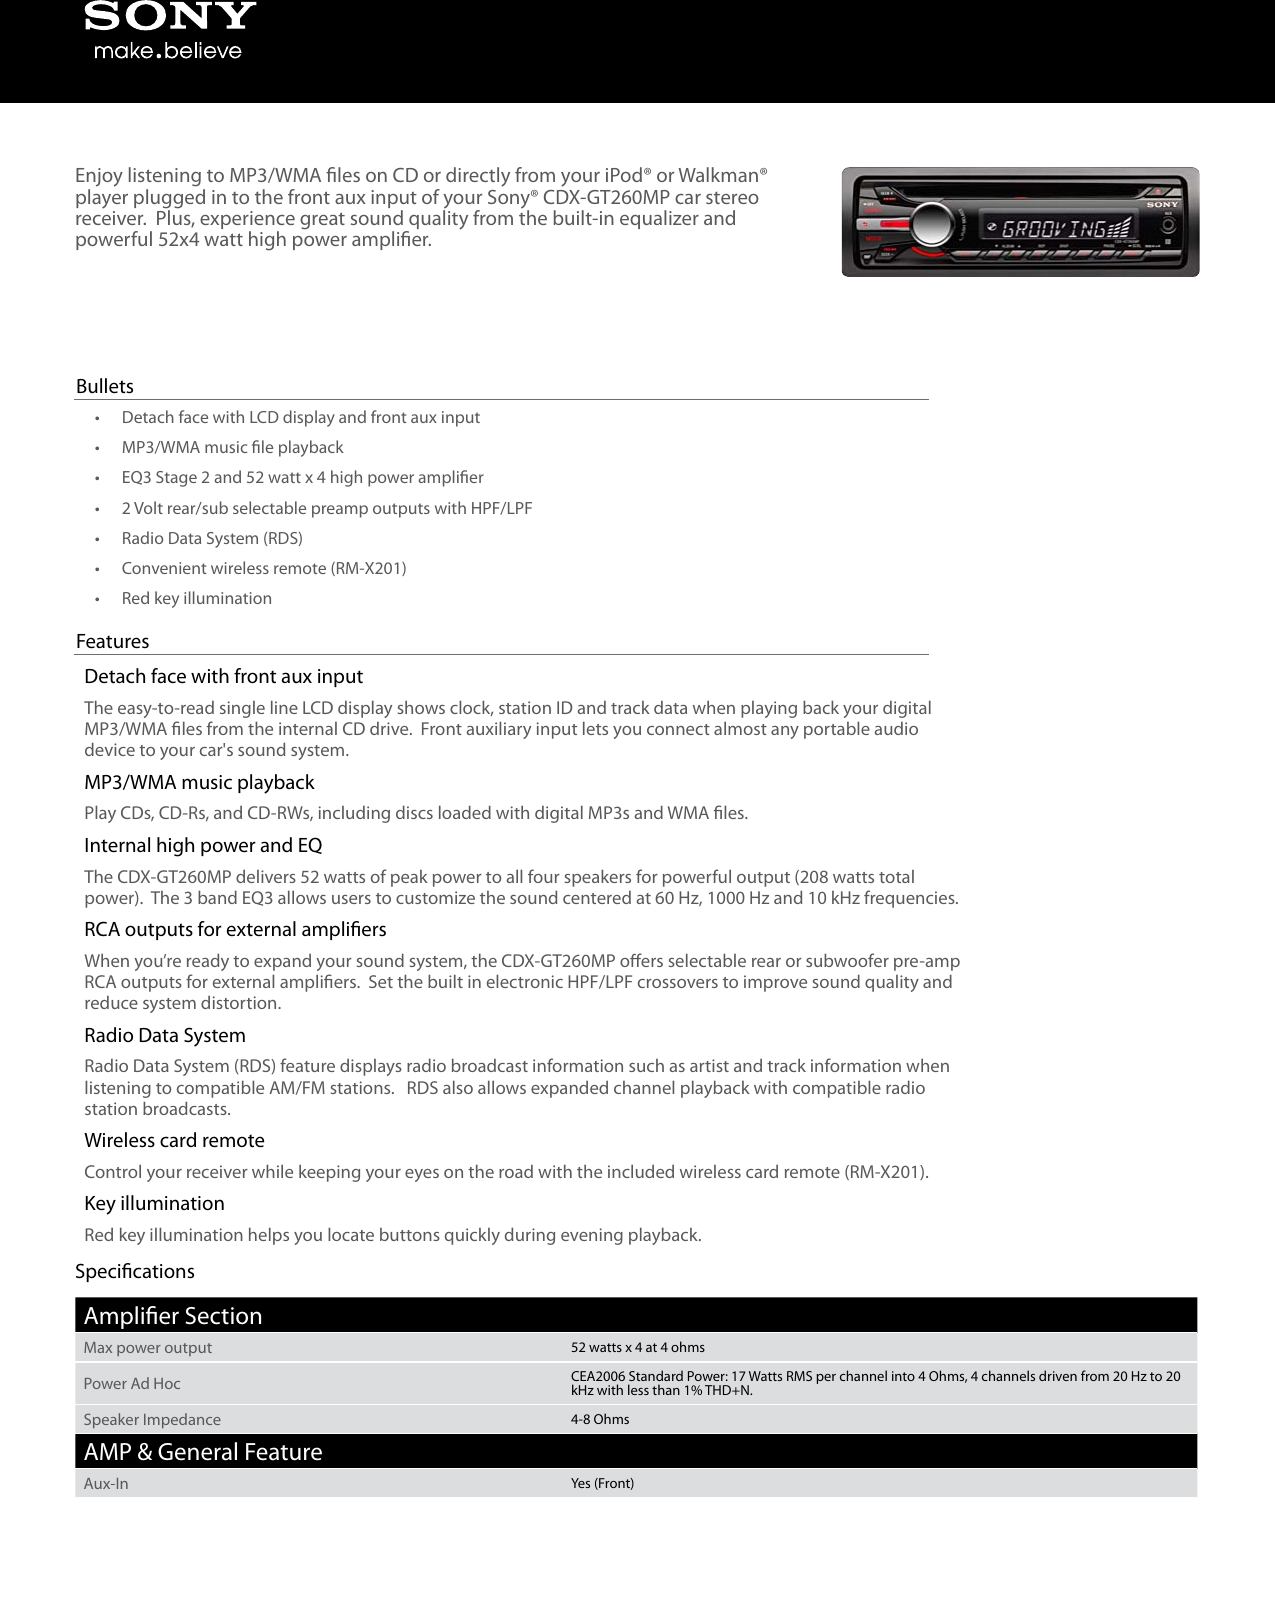 Page 1 of 4 - Sony Sony-Cdx-Gt260Mp-Marketing-Specifications-  Sony-cdx-gt260mp-marketing-specifications